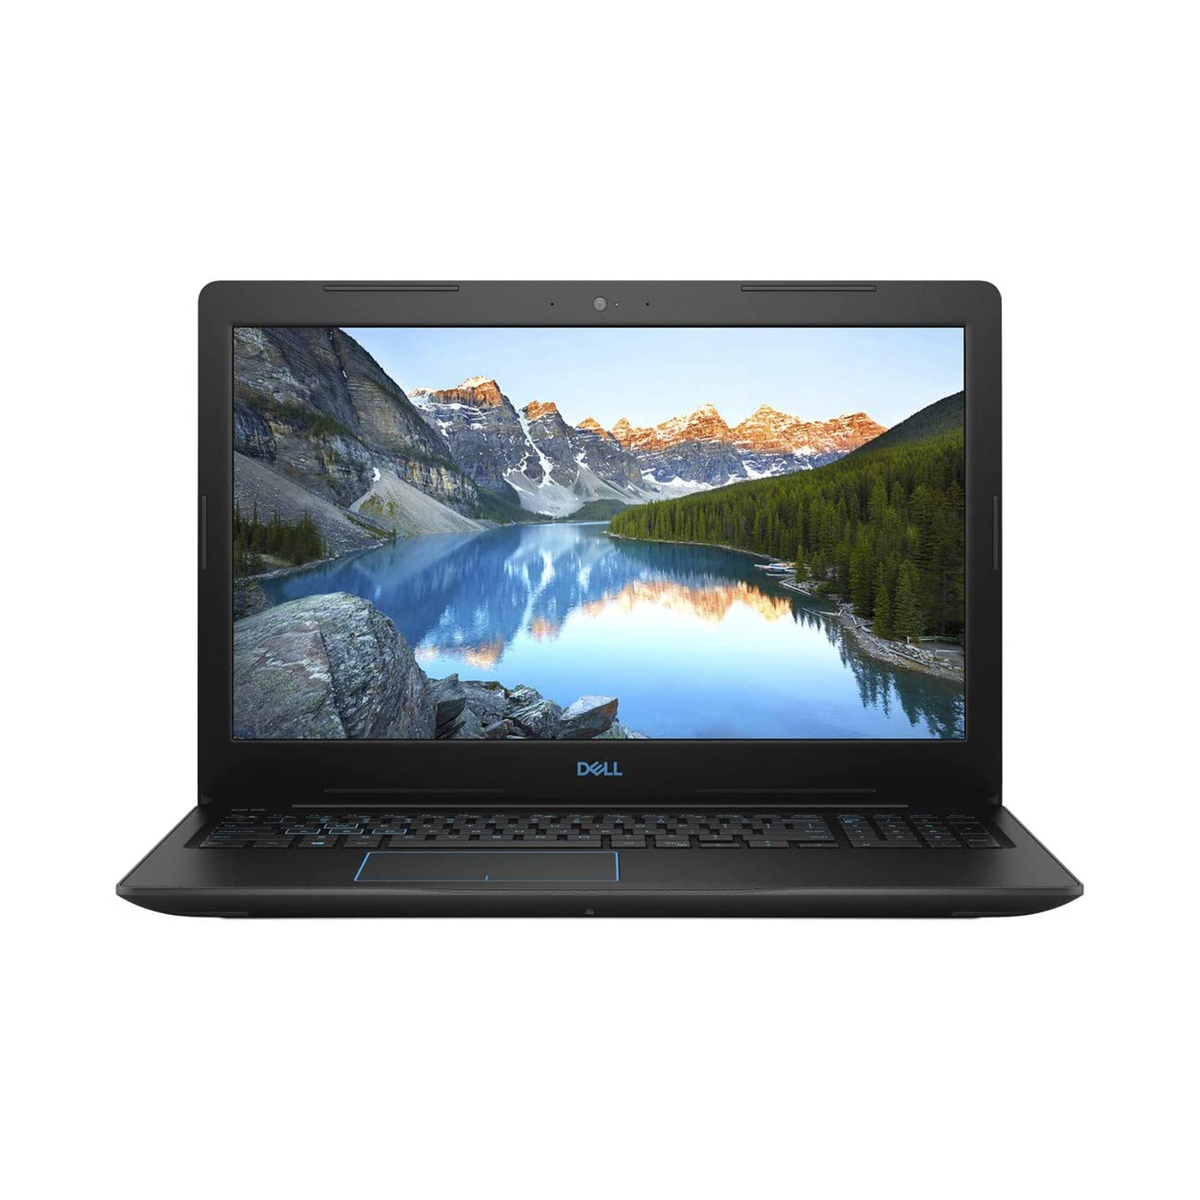 Dell G3 15(G3-1289-BLK)Gaming Laptop Core i7 ,8GB RAM, 1TB HDD +128GB SSD,NVIDIA GeForce GTX 1050 with 3GB GDDR5,Windos10,15.6inch FHD Black